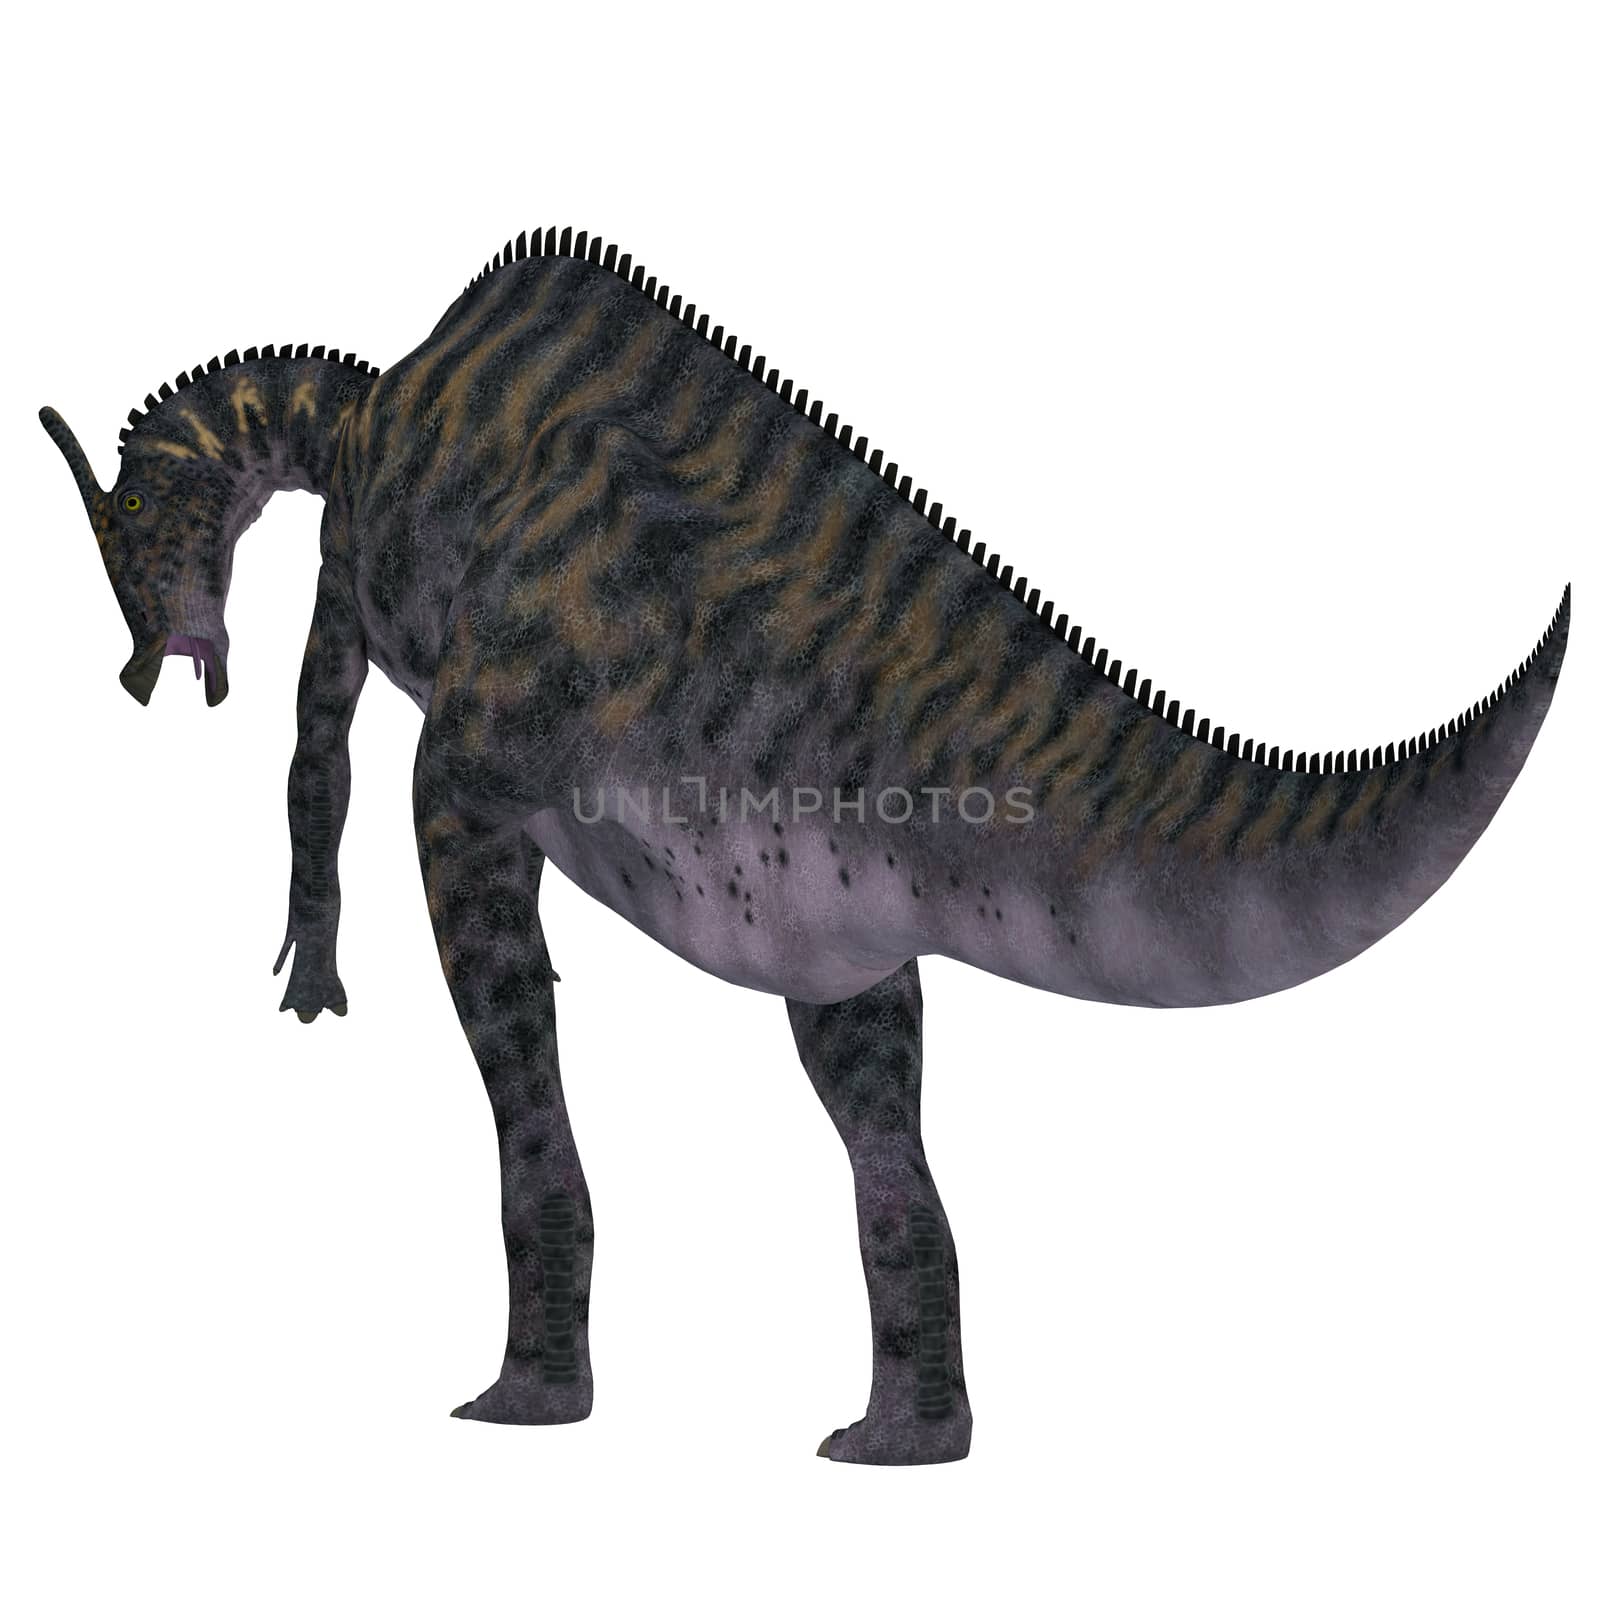 Saurolophus Dinosaur Tail by Catmando